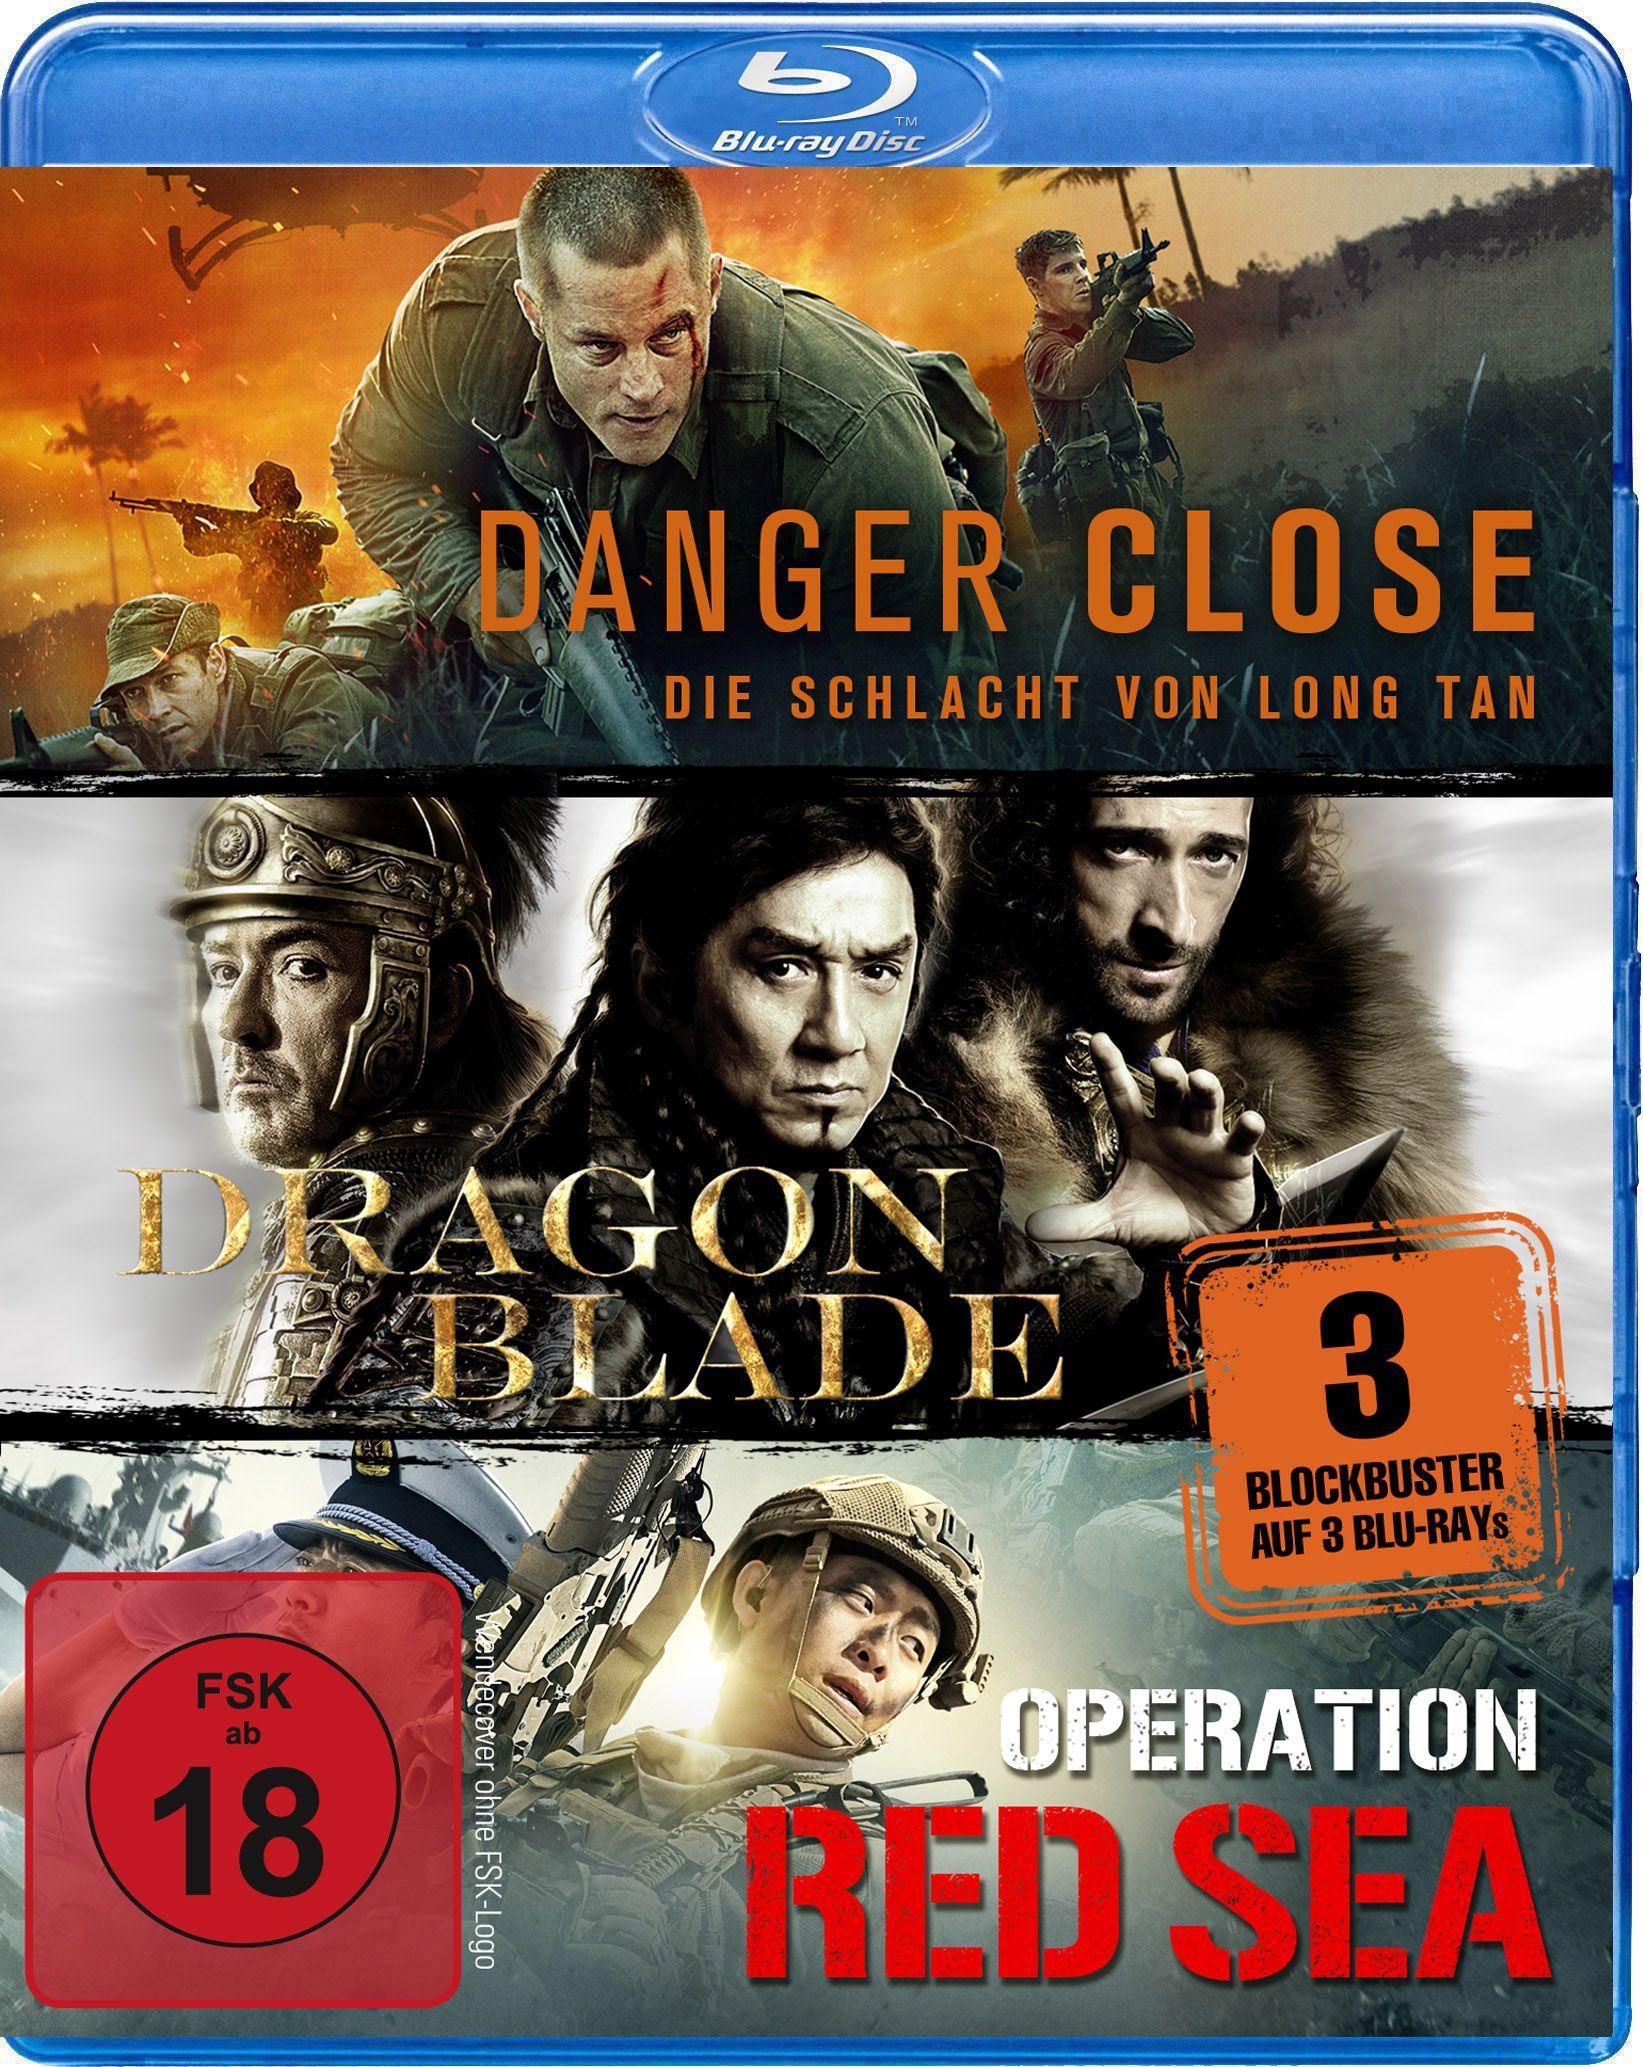 Danger Close / Dragon Blade / Operation Red Sea (Kriegsfilm-Box) (3 Discs) (BLURAY)